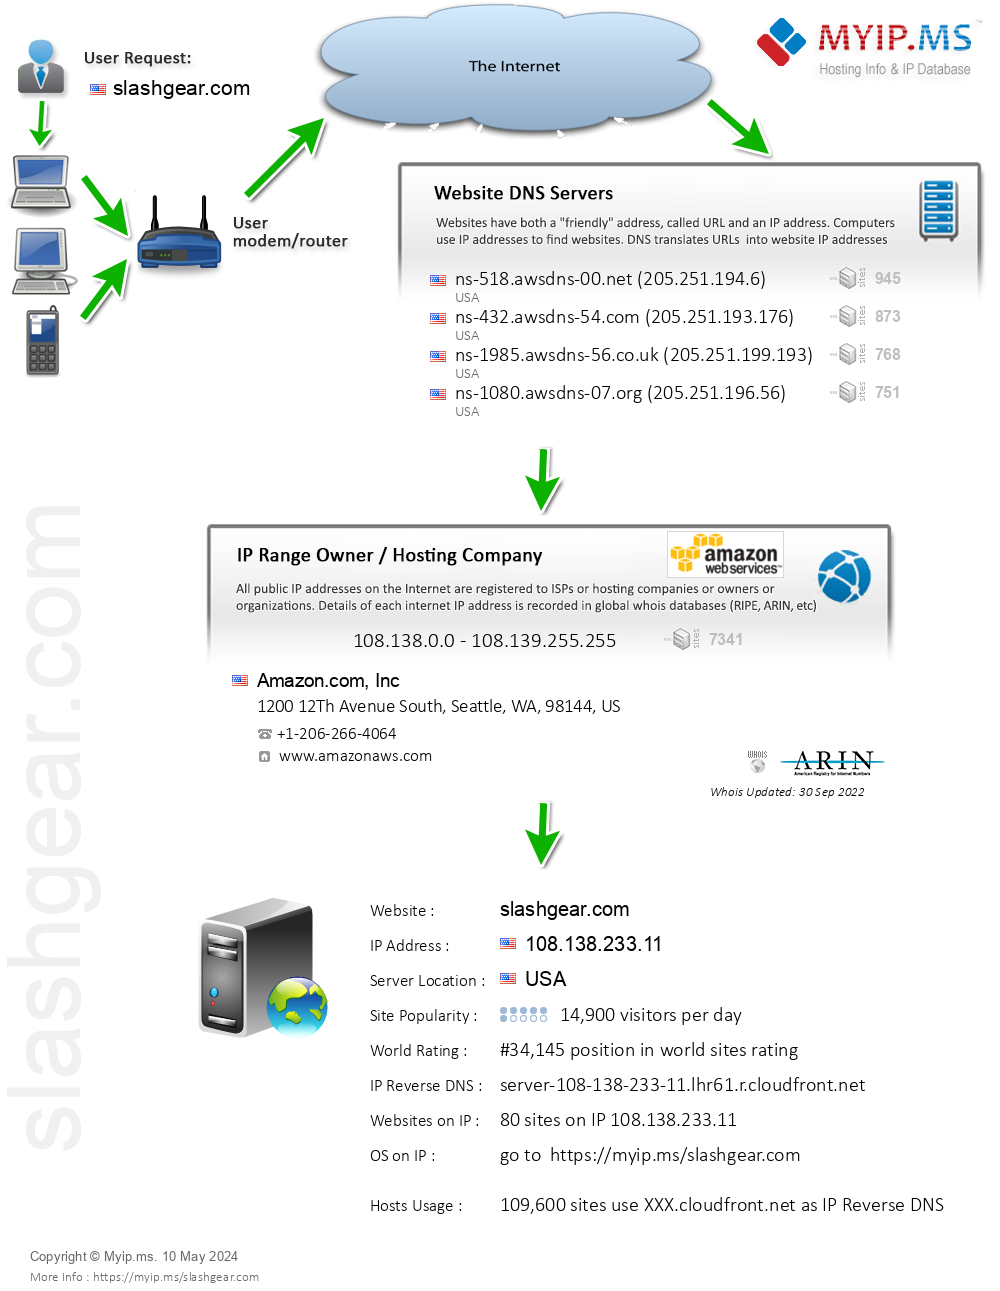 Slashgear.com - Website Hosting Visual IP Diagram